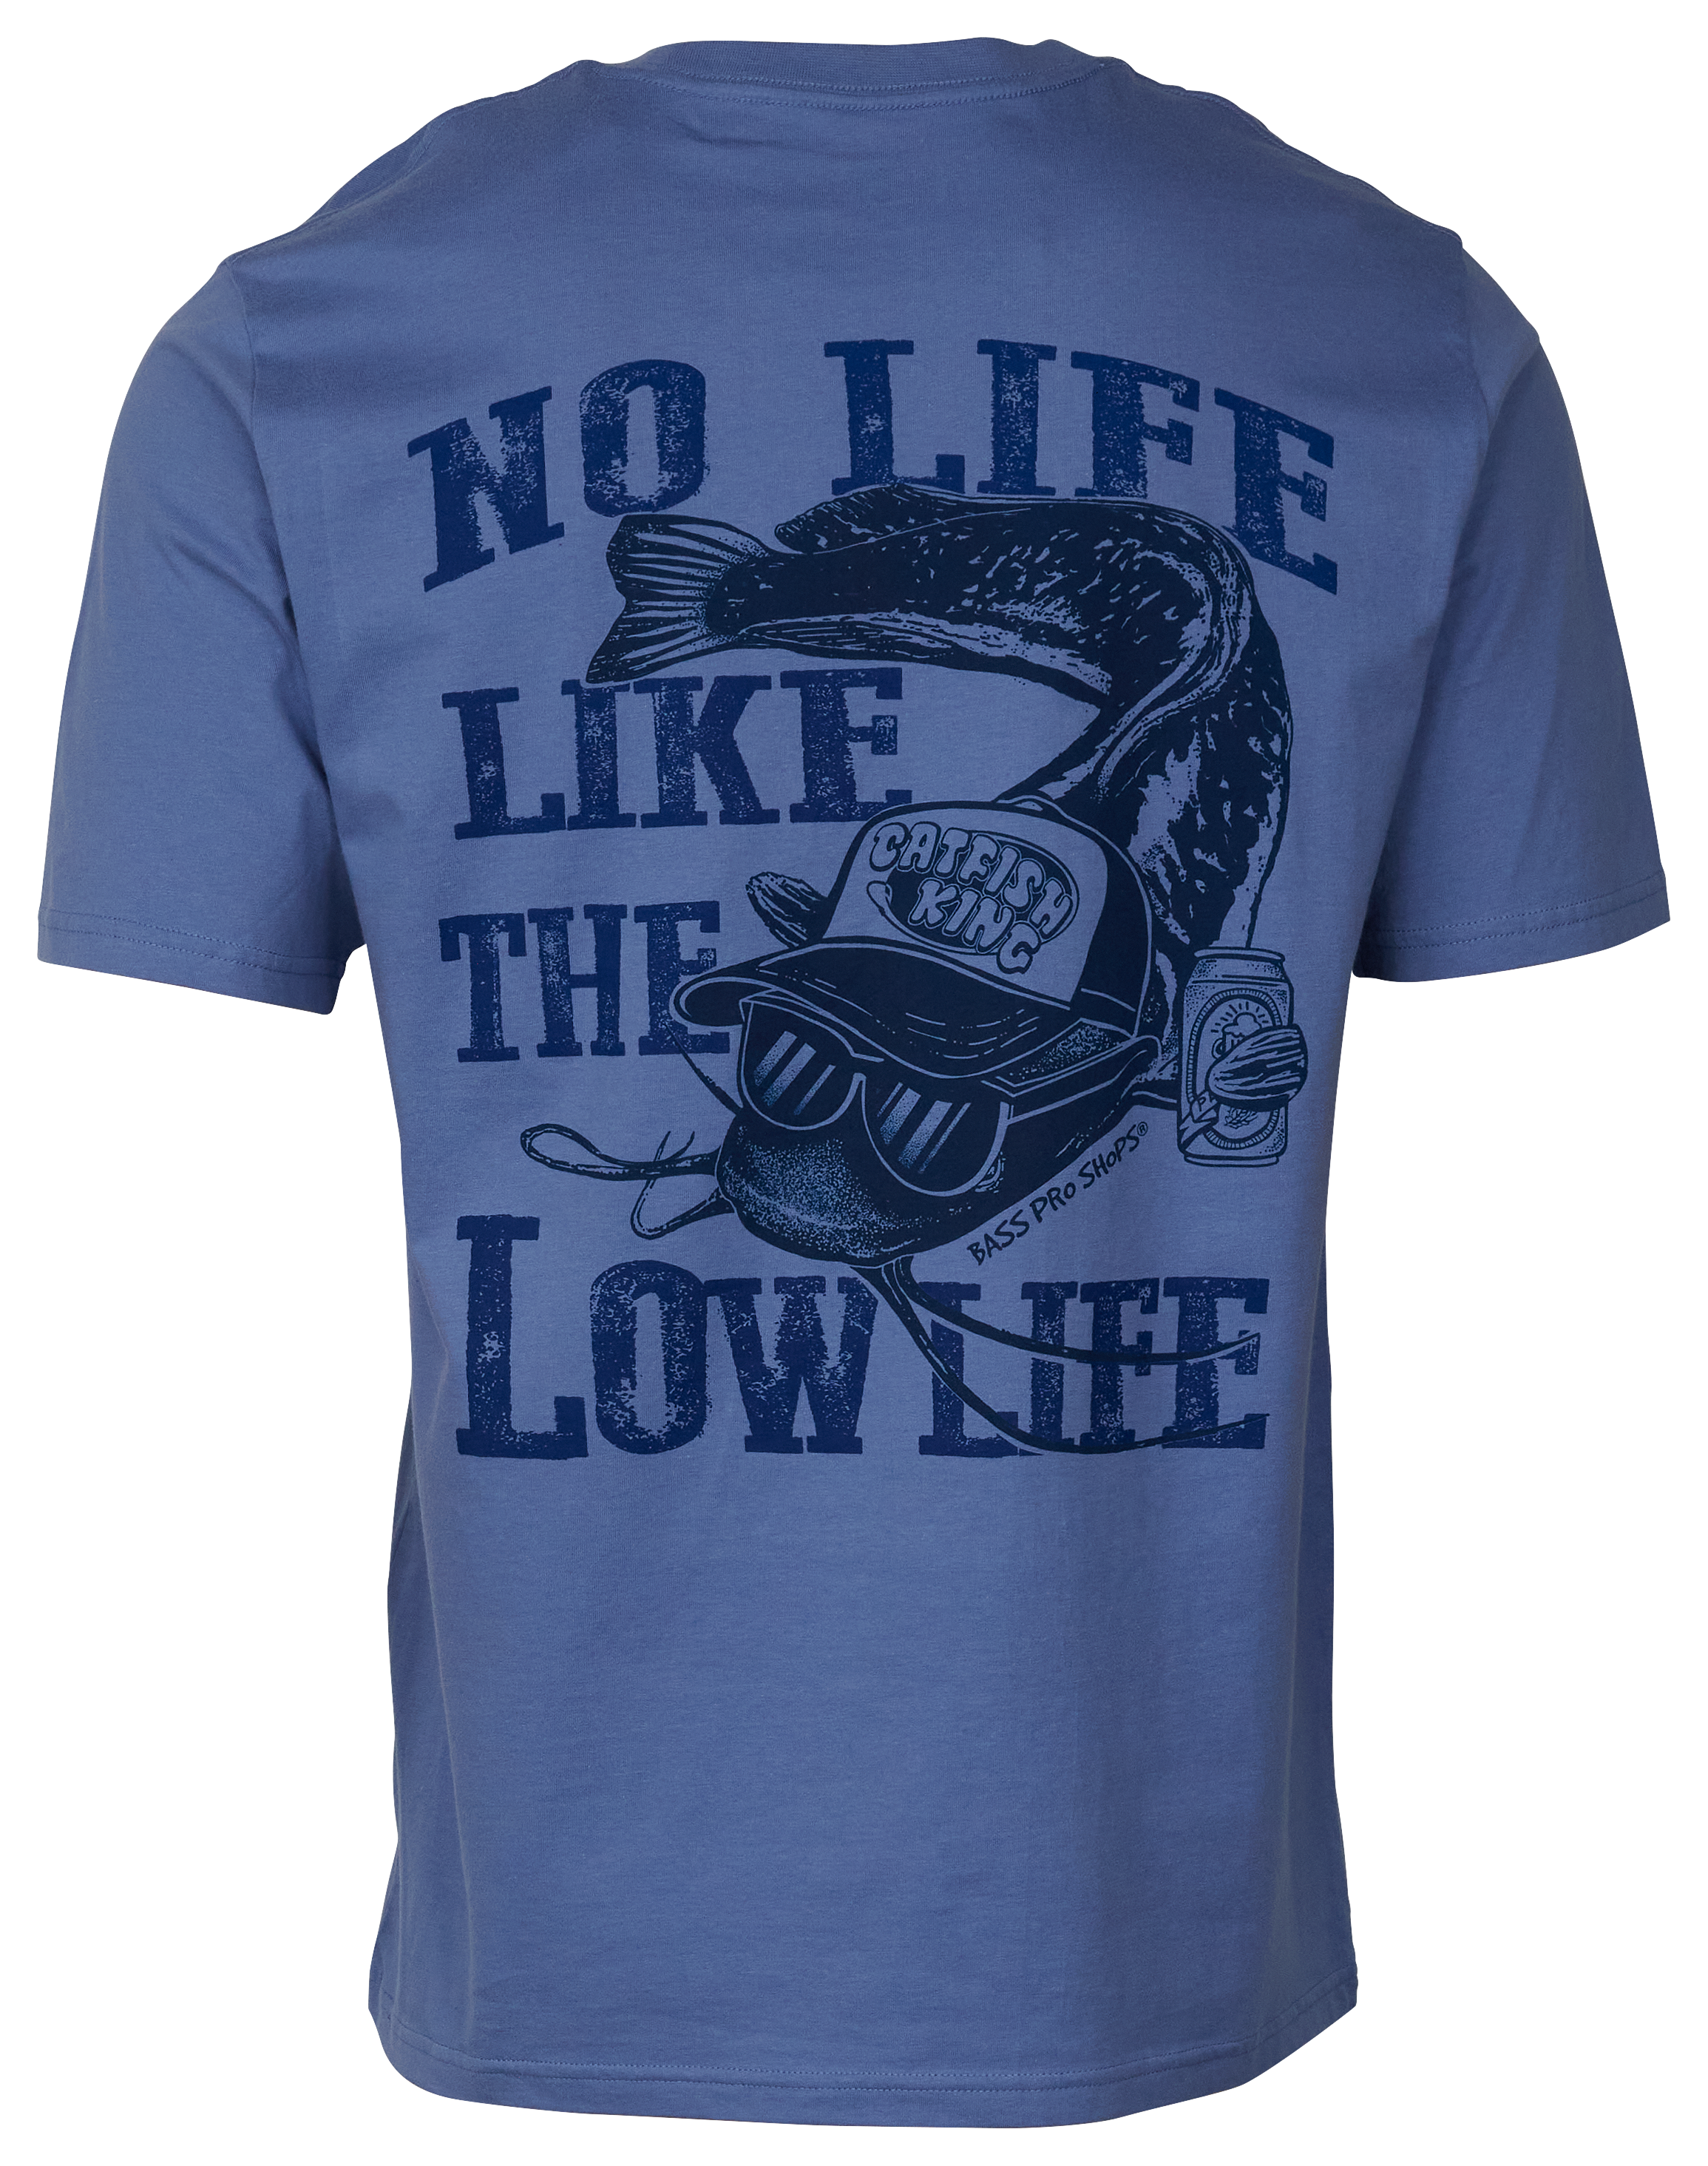 Bass Pro Shops Low Life Short-Sleeve T-Shirt for Men